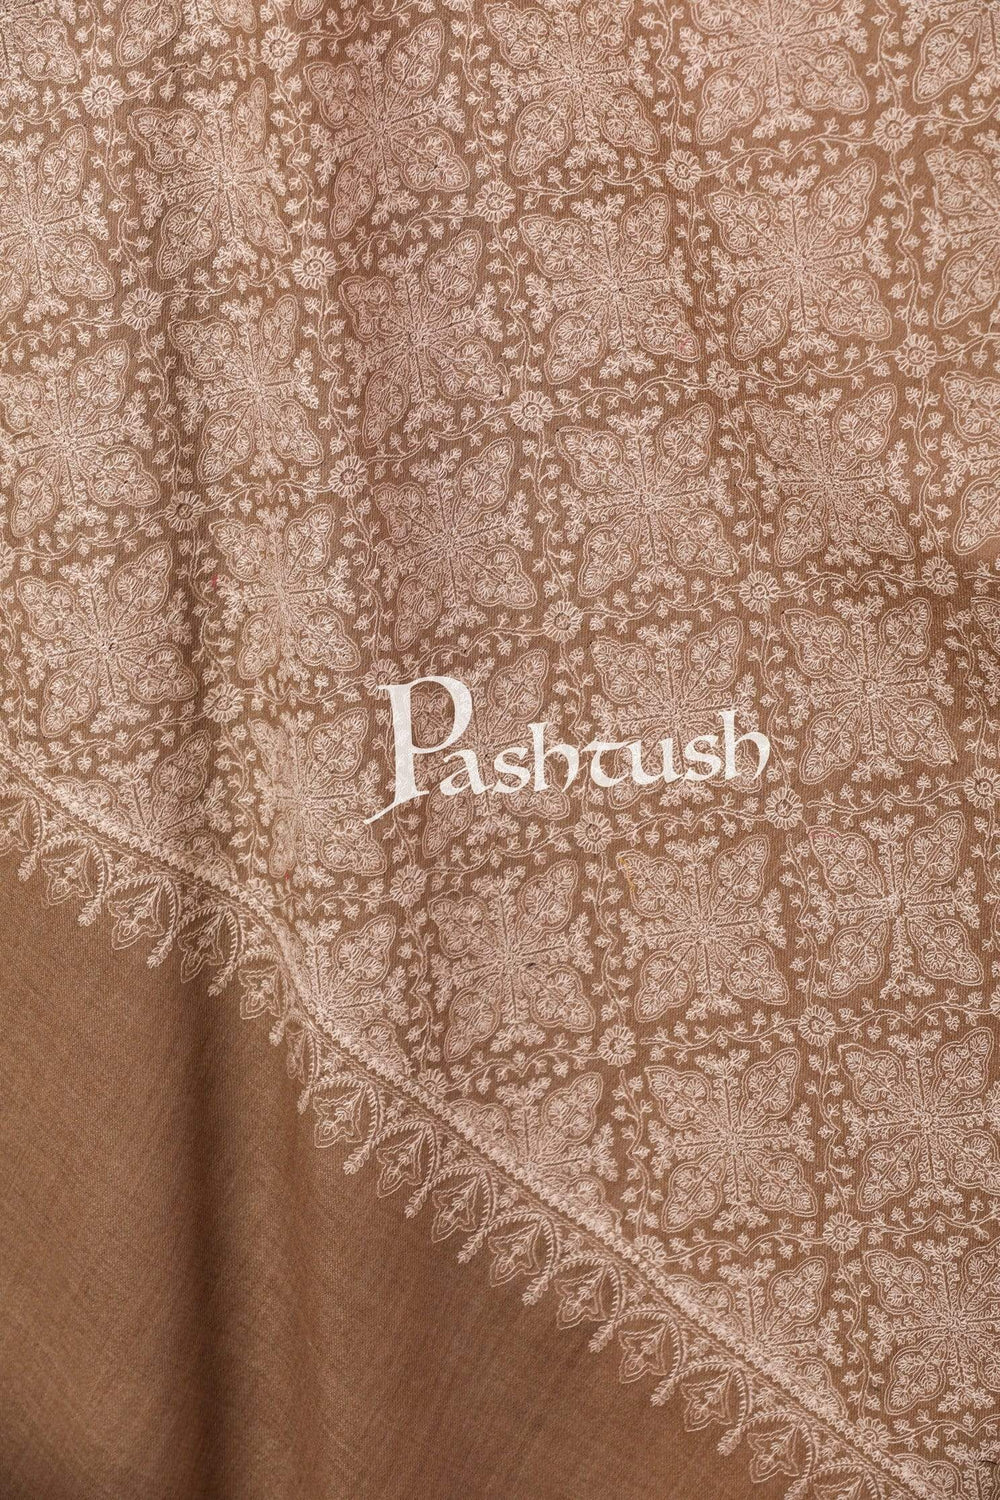 Pashtush India Shawl Pashtush Womens Shawl with Tone on Tone Embroidery, Soft and Warm, Taupe